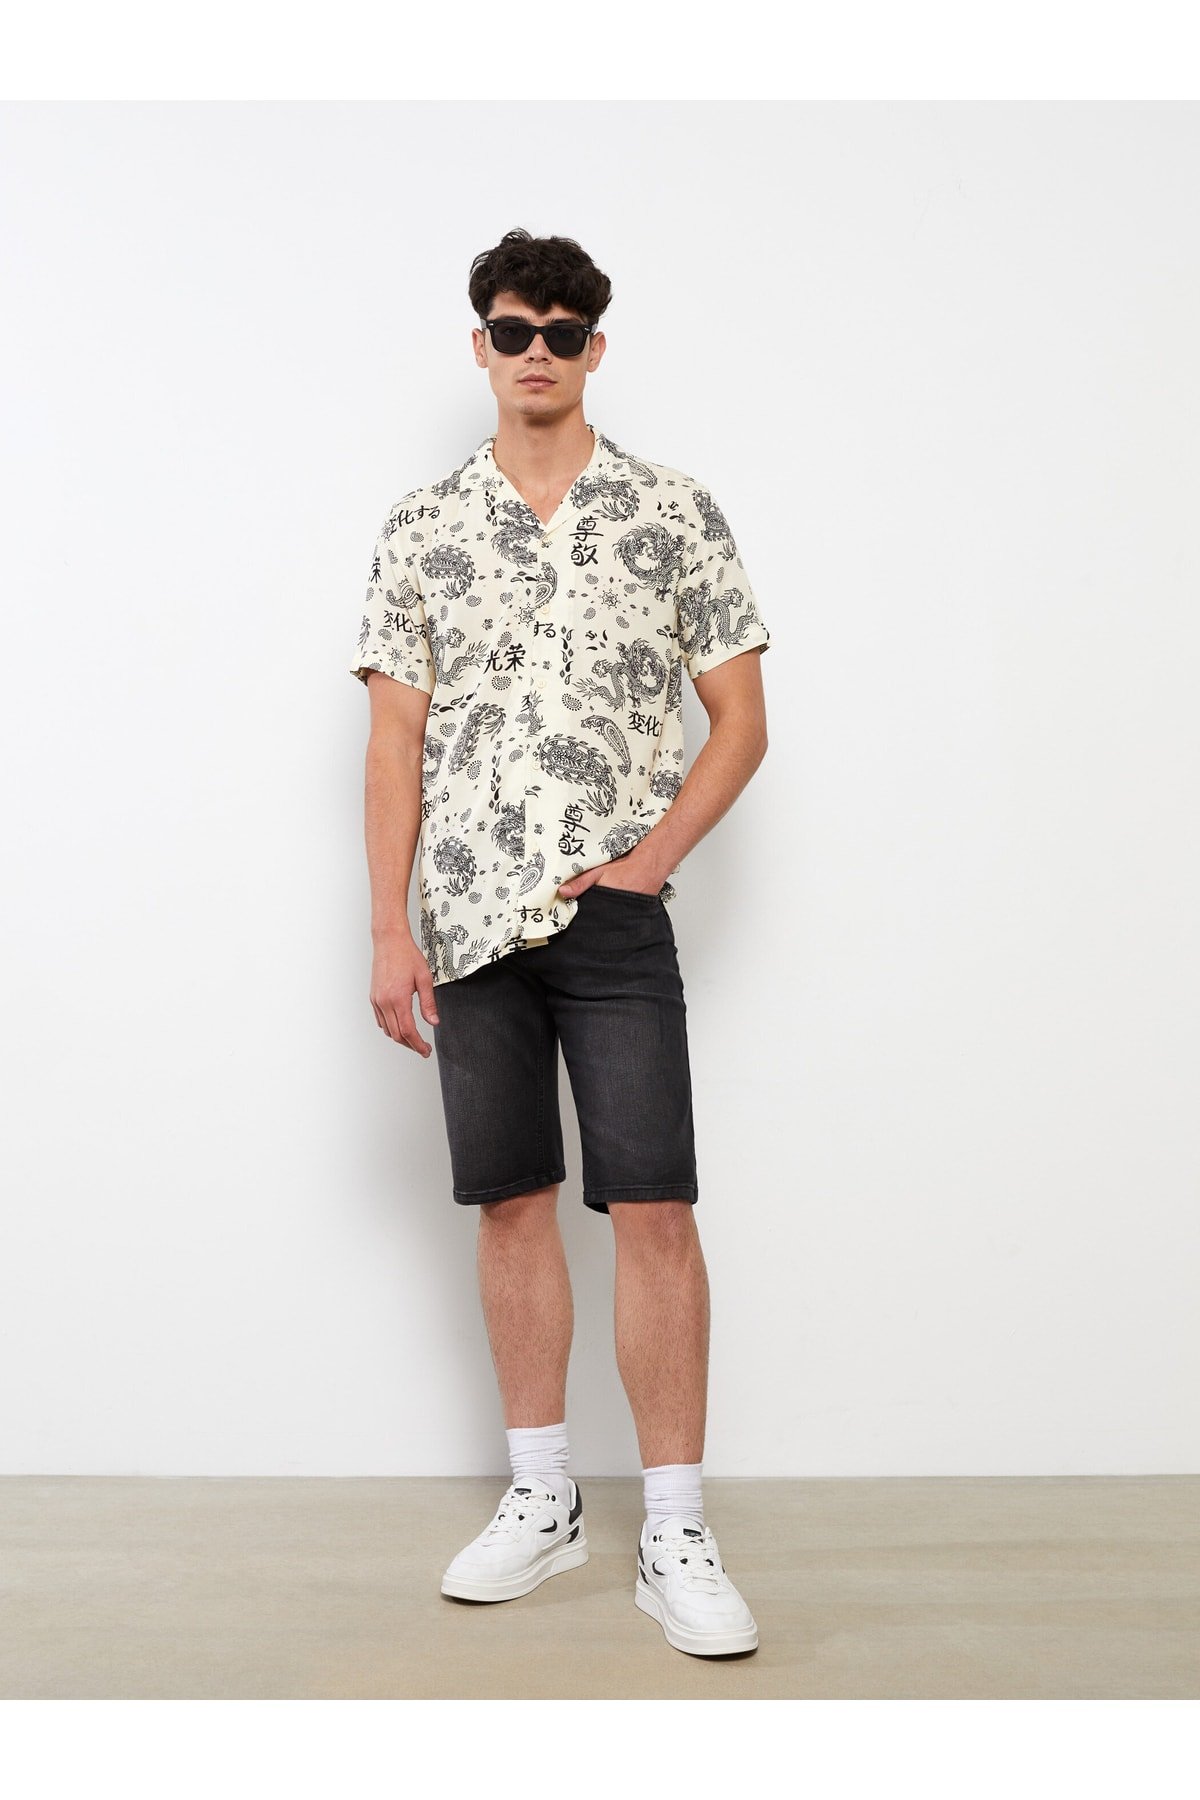 LC Waikiki Men's Regular Fit Resort Collar Short Sleeve Patterned Viscose Shirt